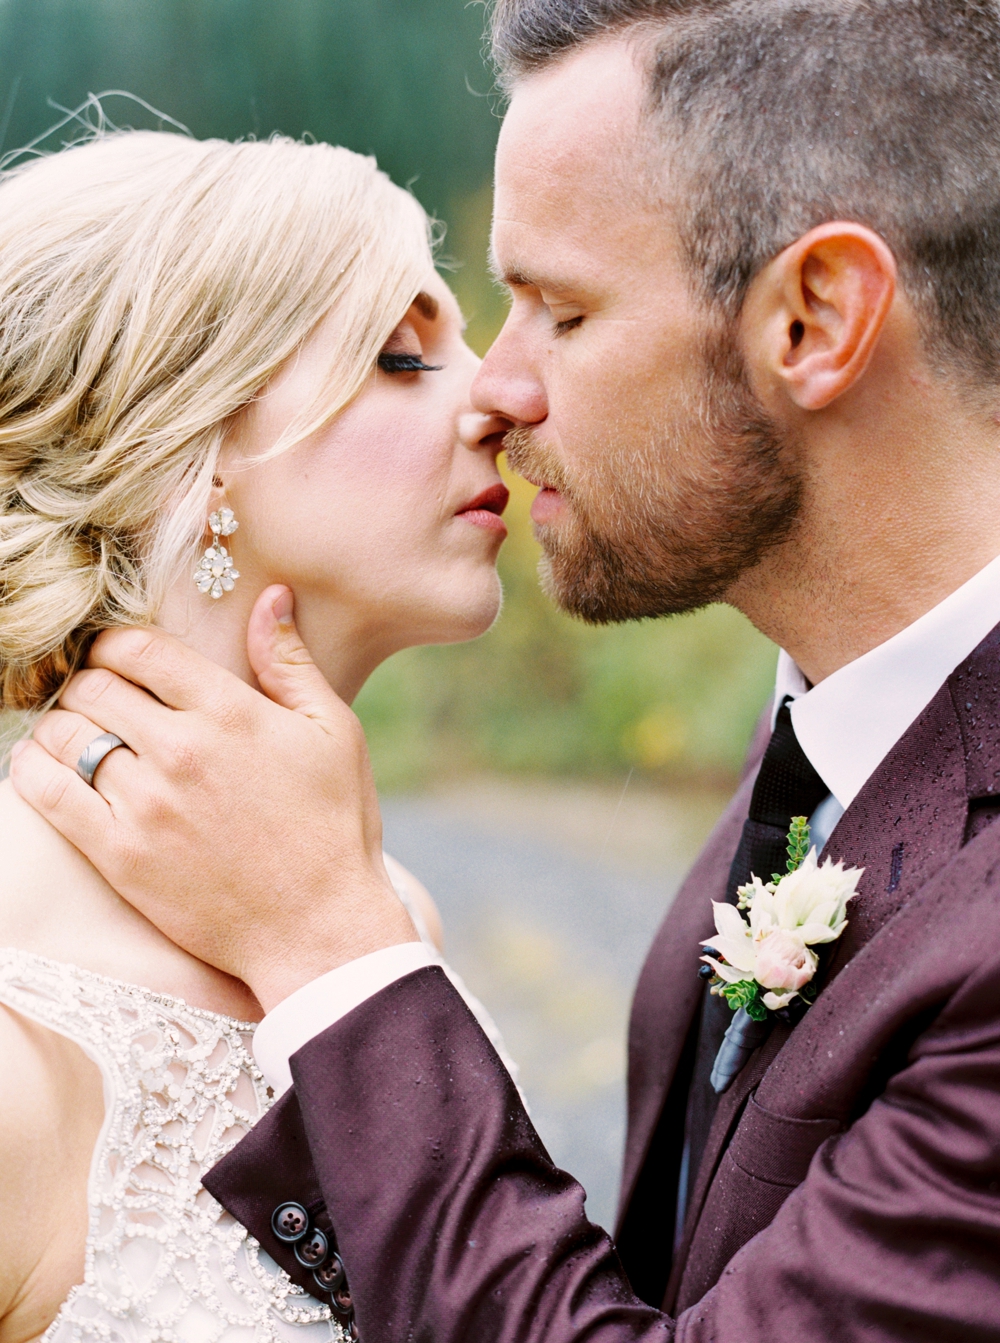 Canmore wedding photographers | Banff wedding photography | silvertip canmore wedding | fine art film photographer Justine Milton